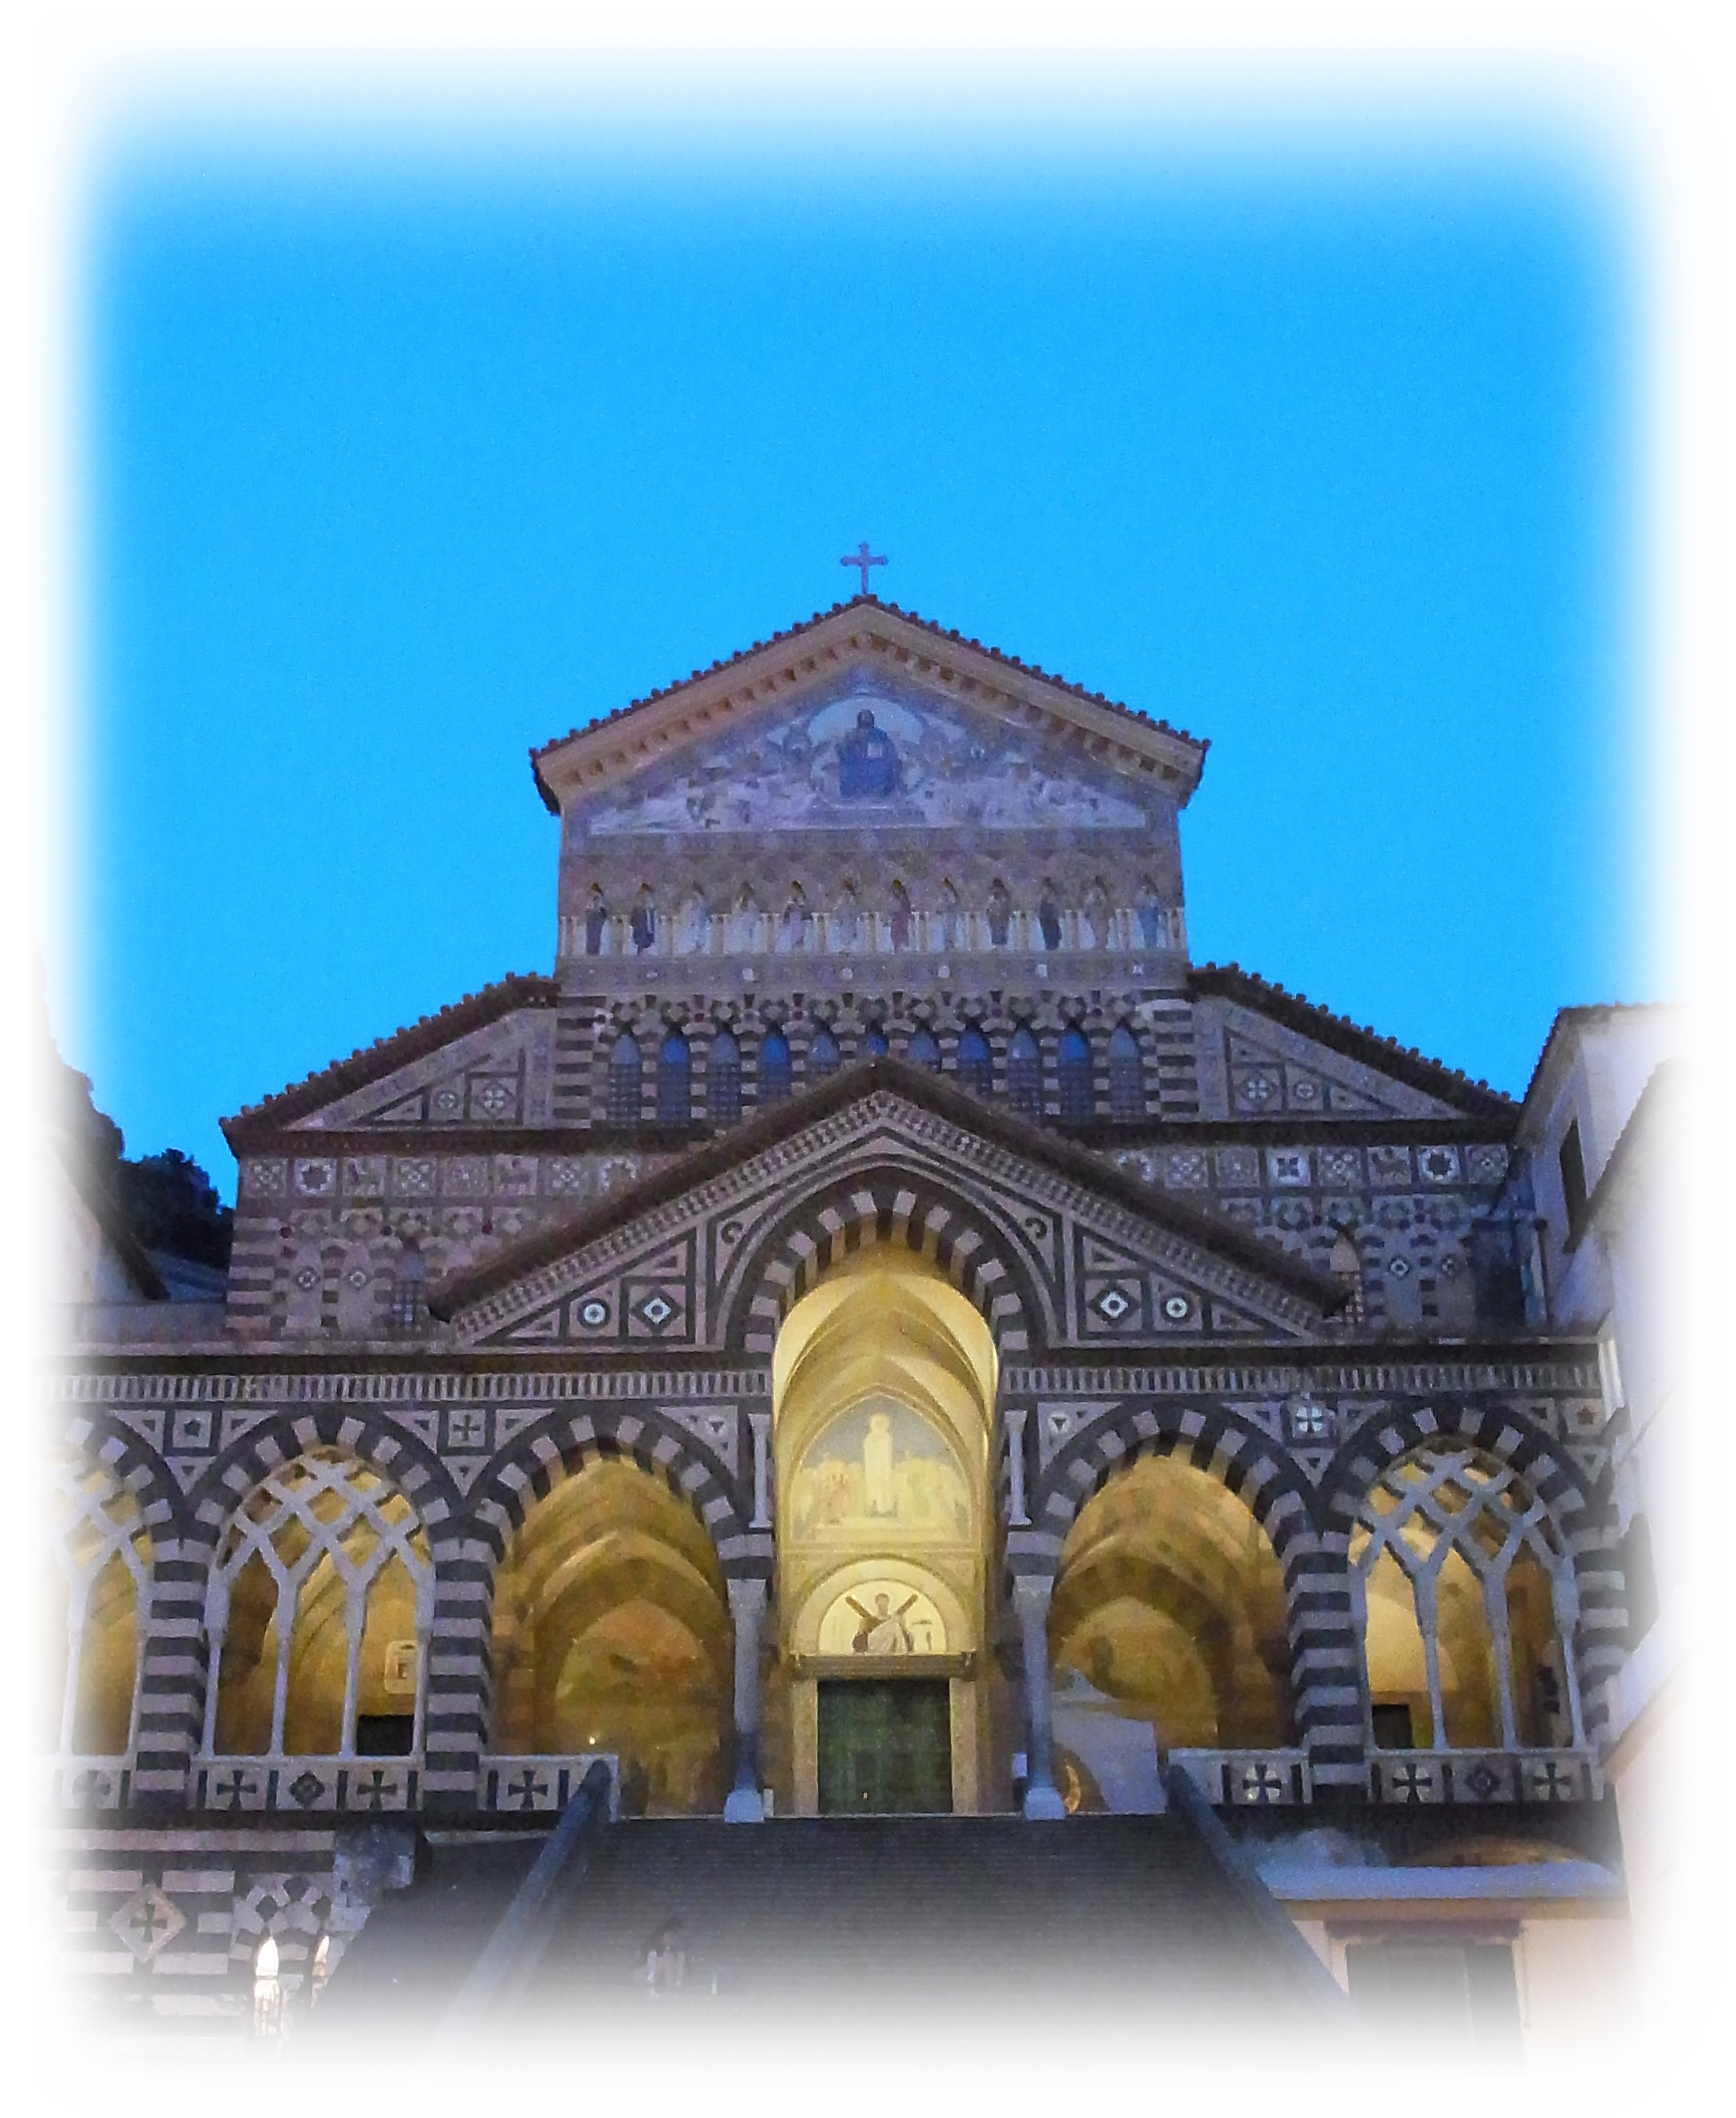 Duomo di Amalfi after dark